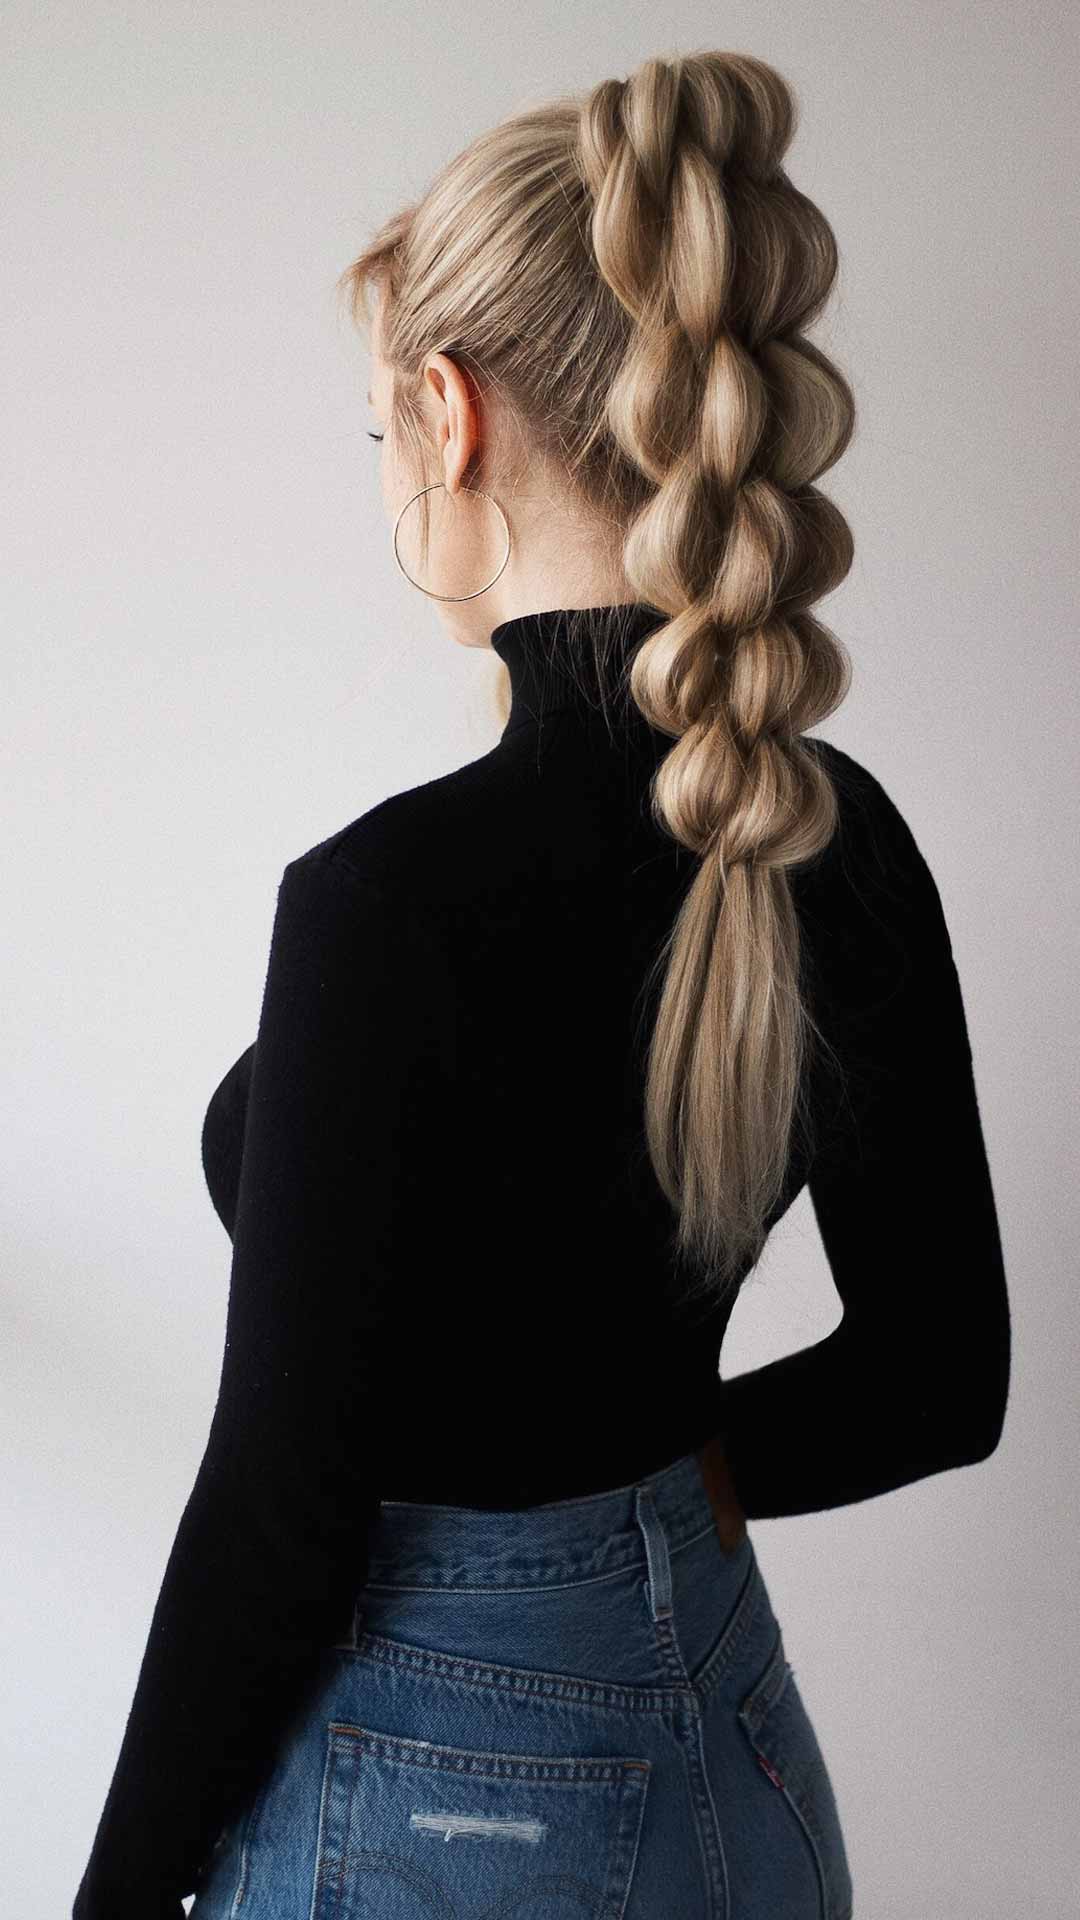 Braided ponytail hairstyle